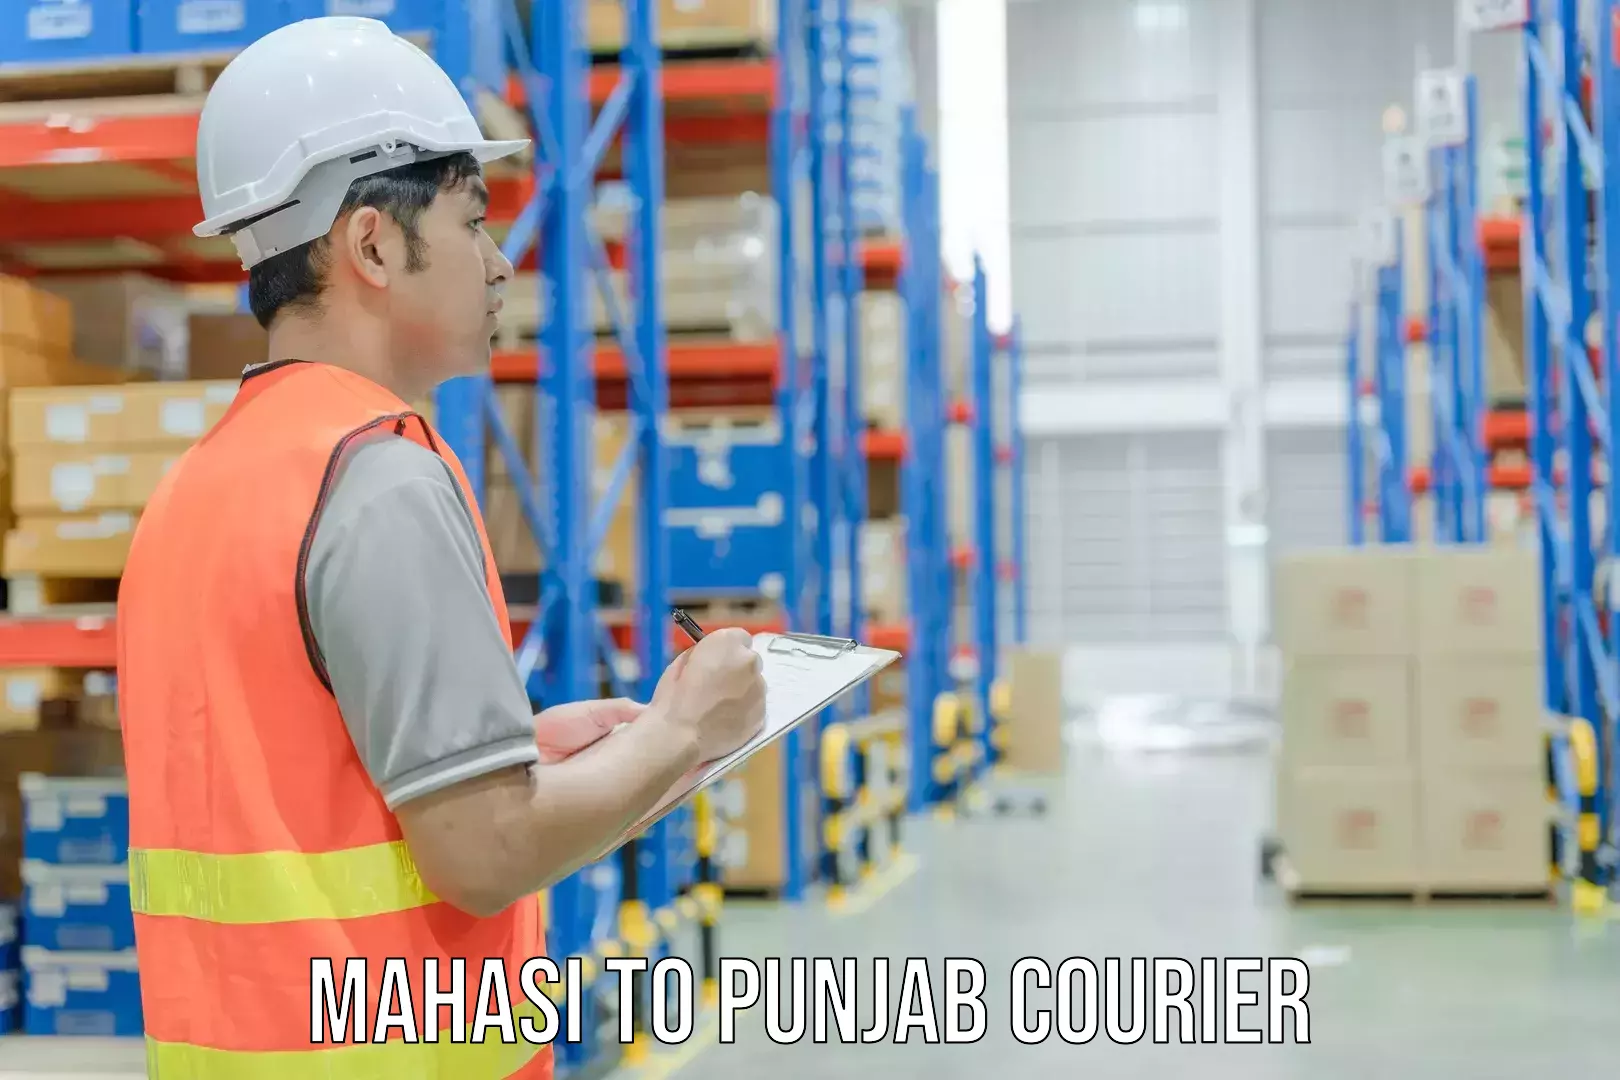 Global delivery options Mahasi to Punjab